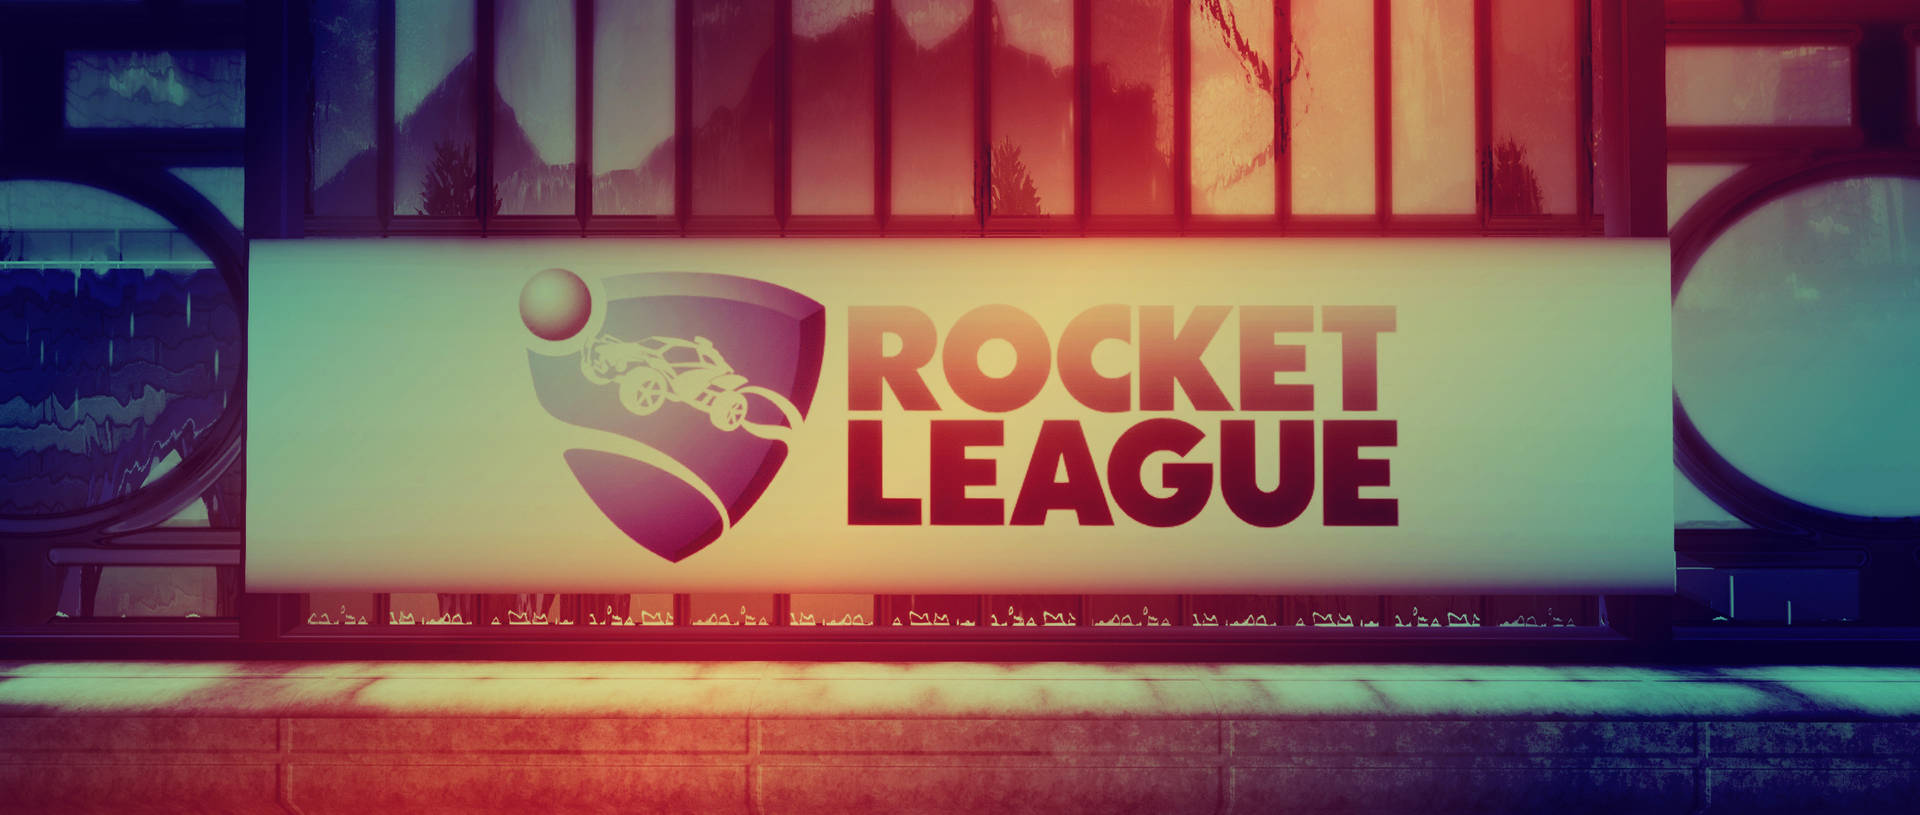 Rocket League 2k 2881 X 1223 Wallpaper